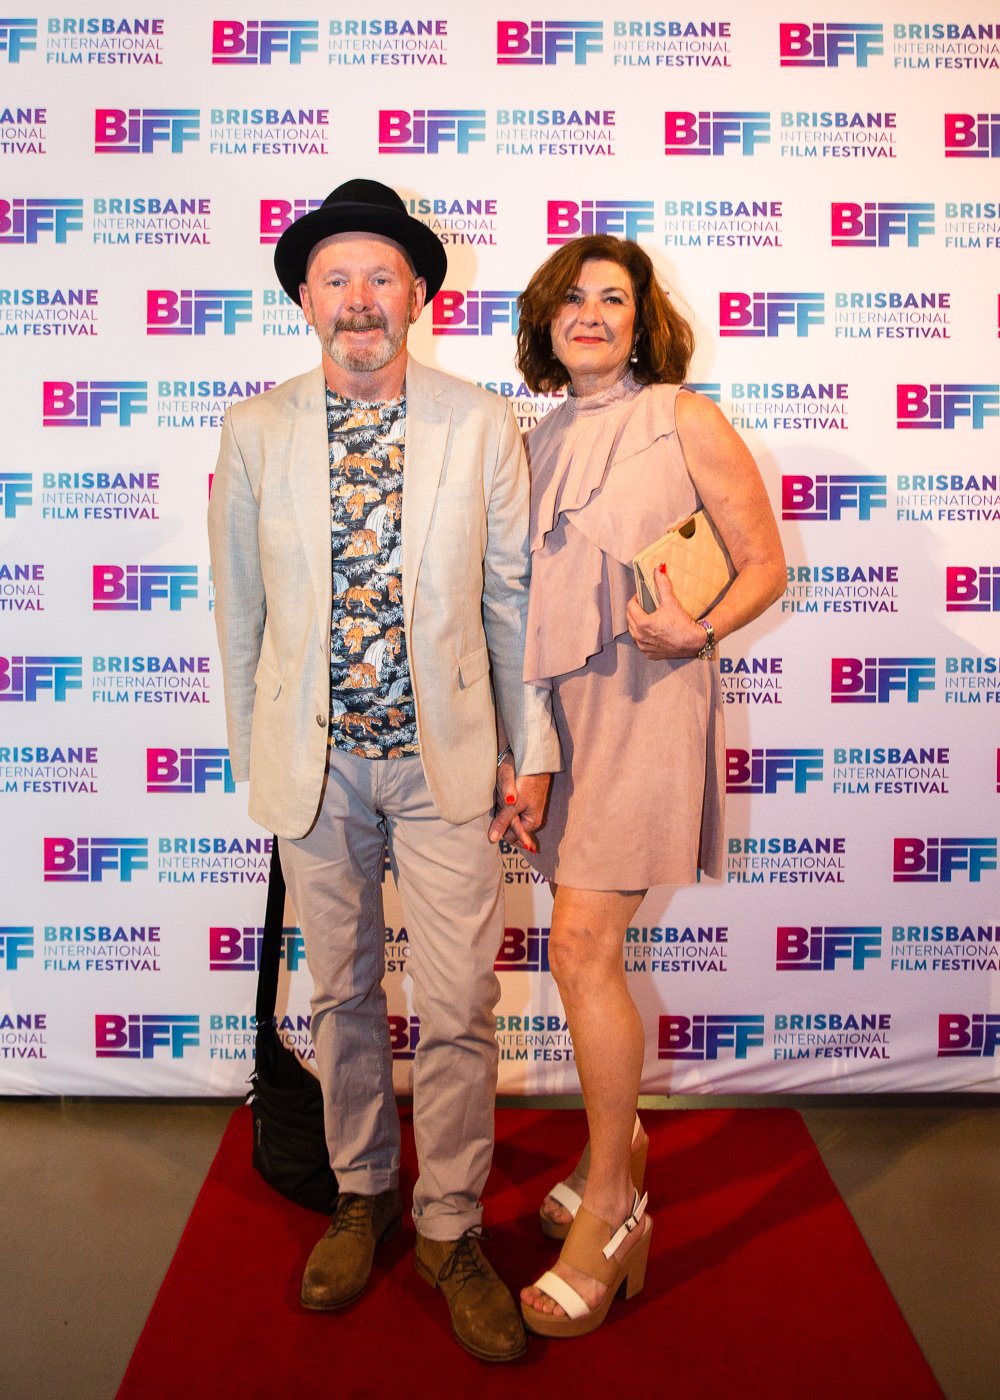 Brisbane International Film Festival Opening Night